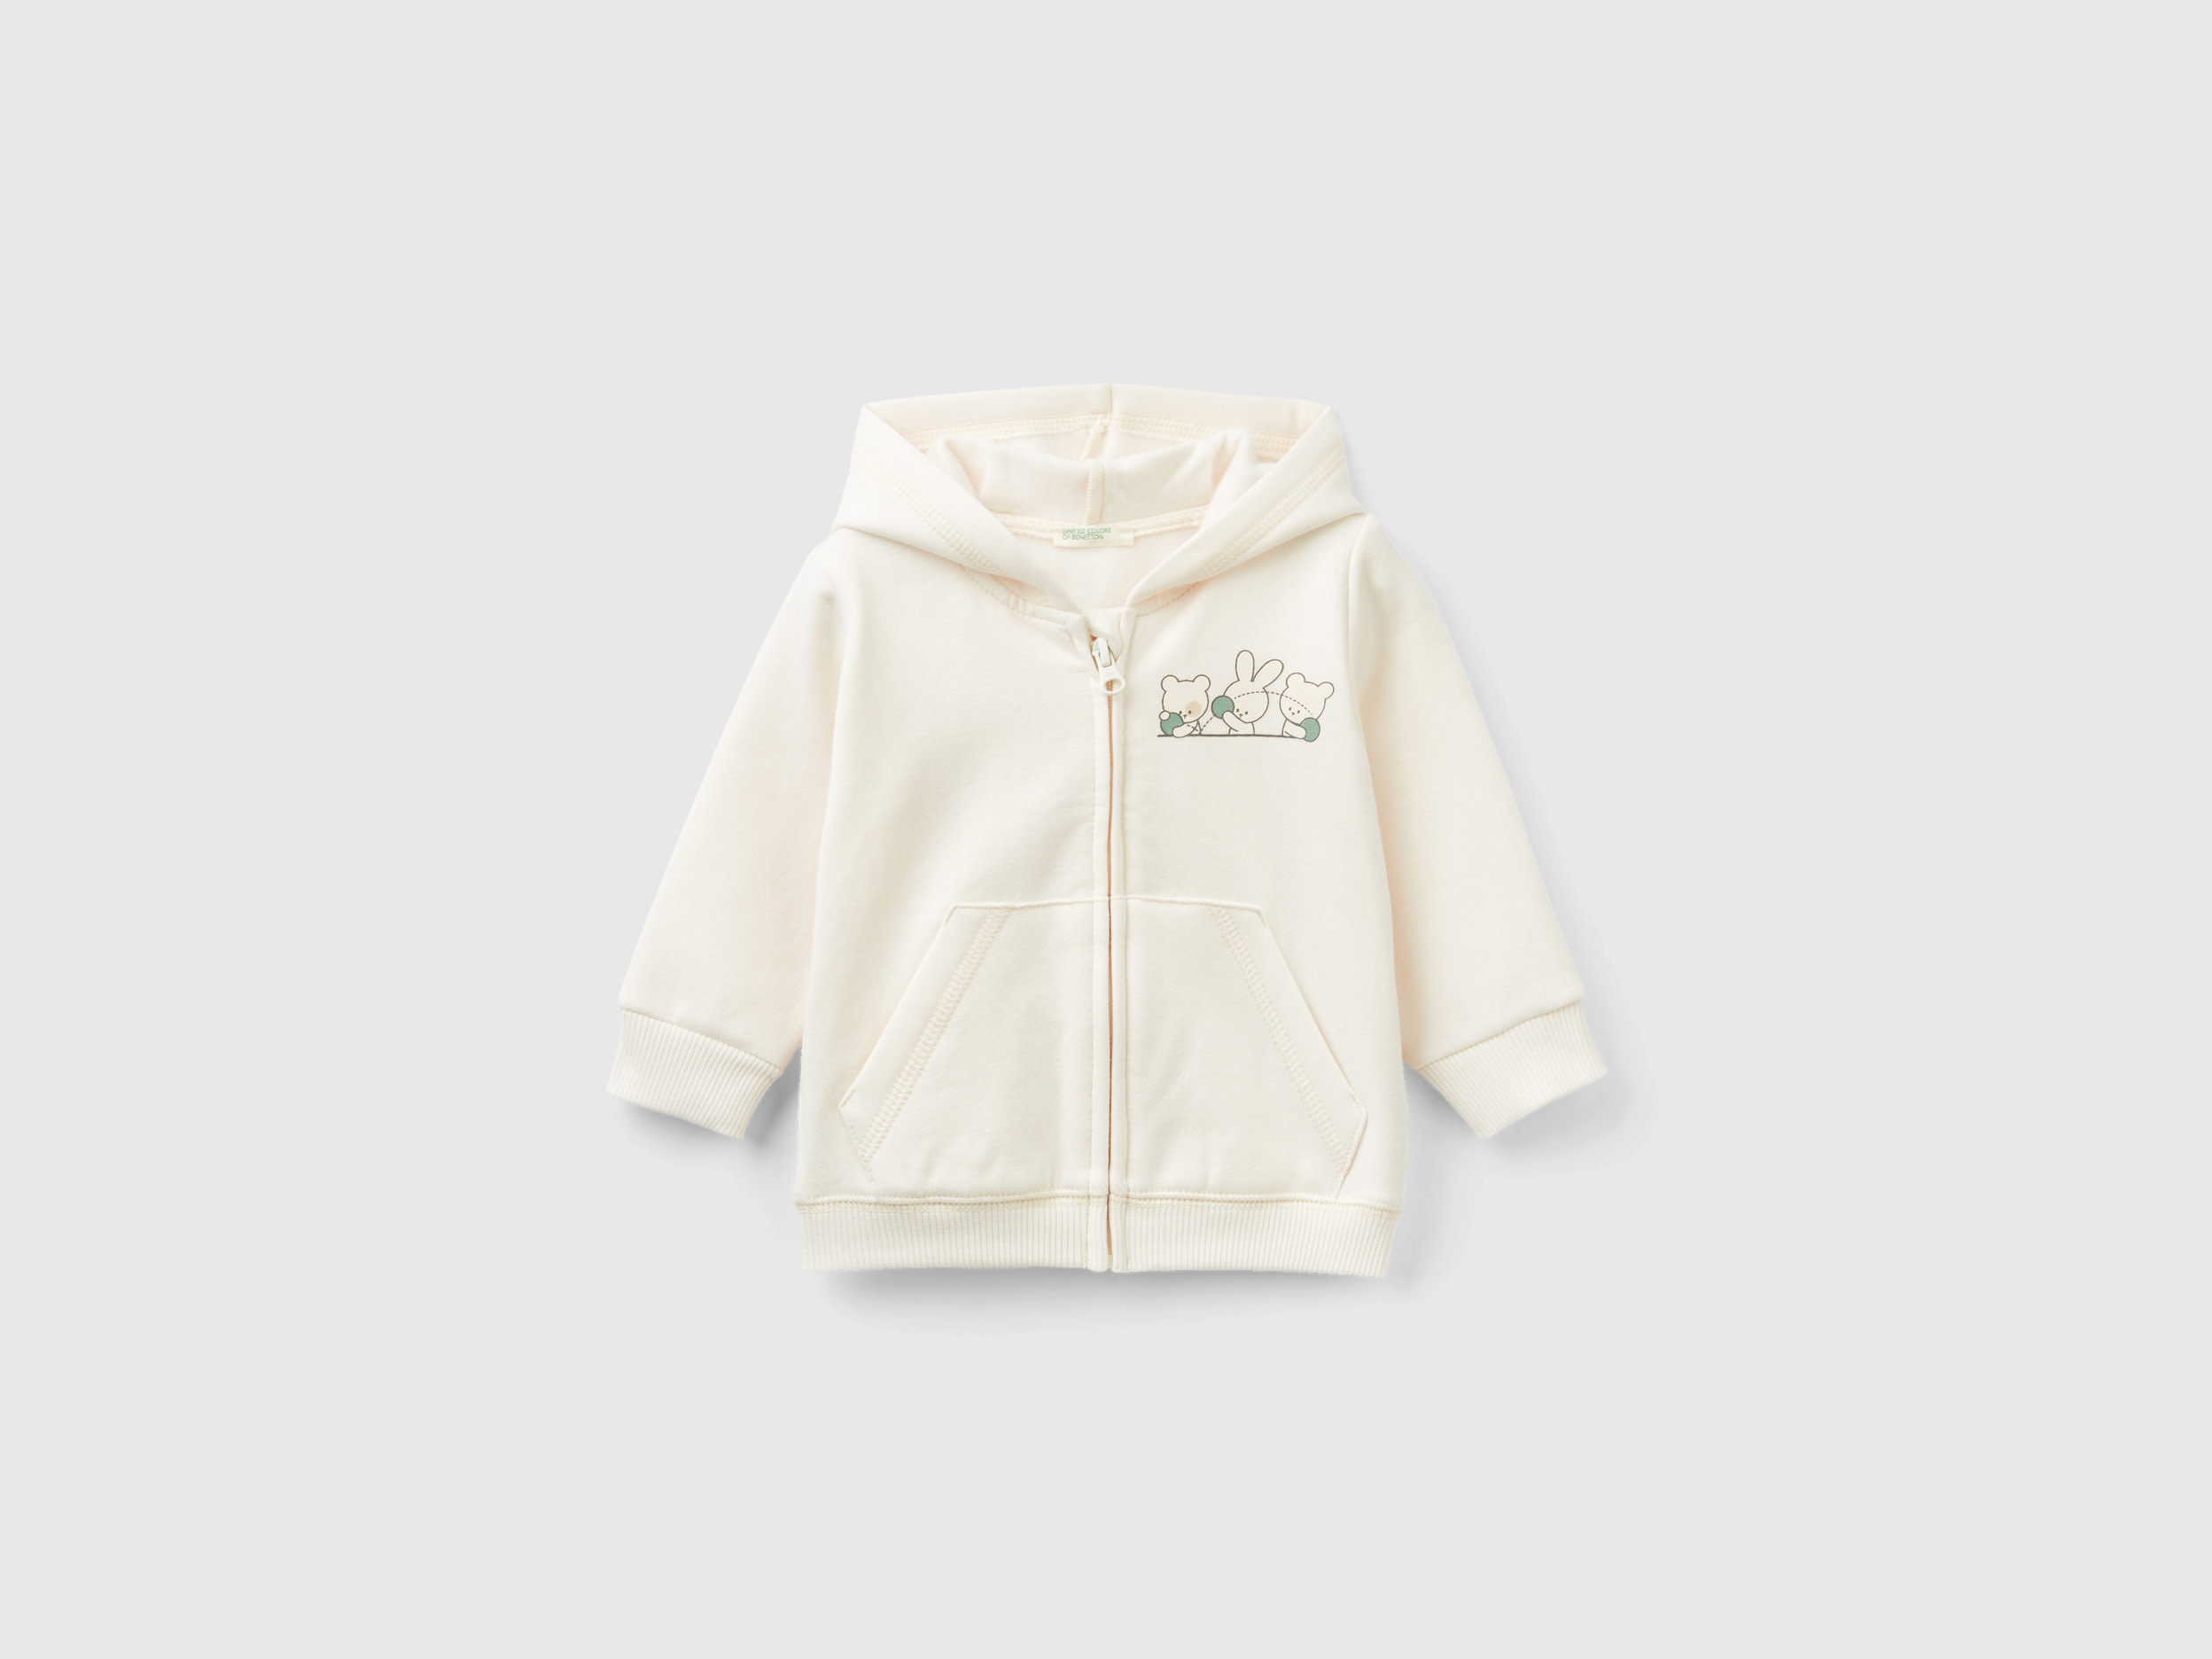 Benetton, Warm Sweatshirt With Animal Print, size 0-1, Creamy White, Kids